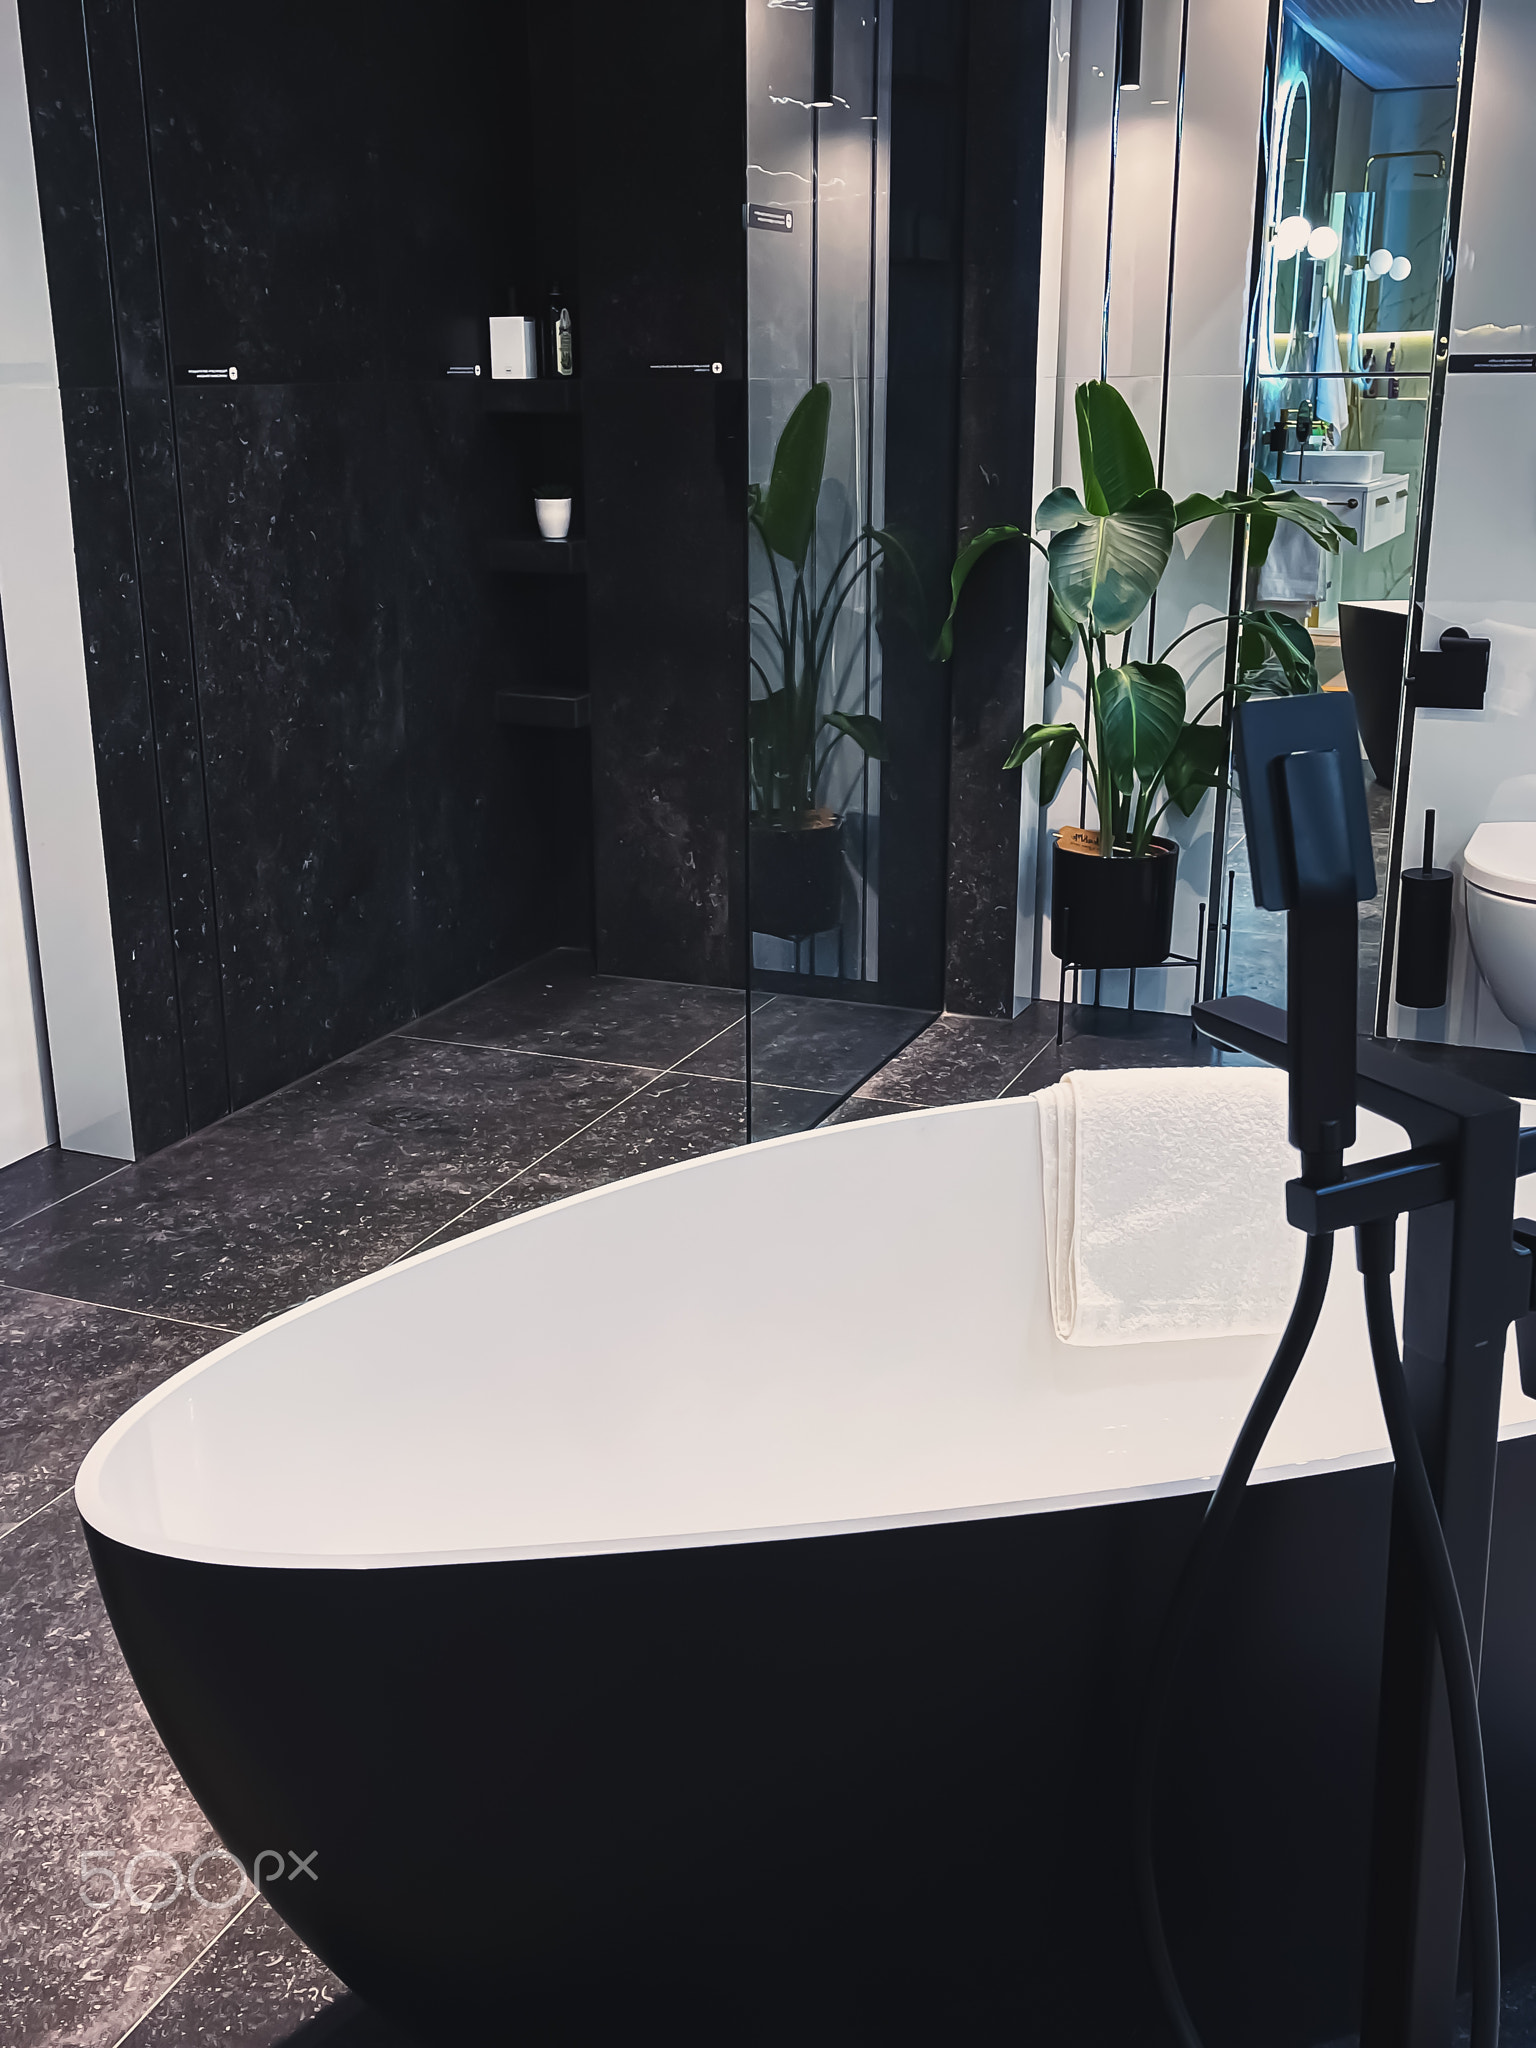 Modern bathroom interior, eco-friendly furniture decor made of organic